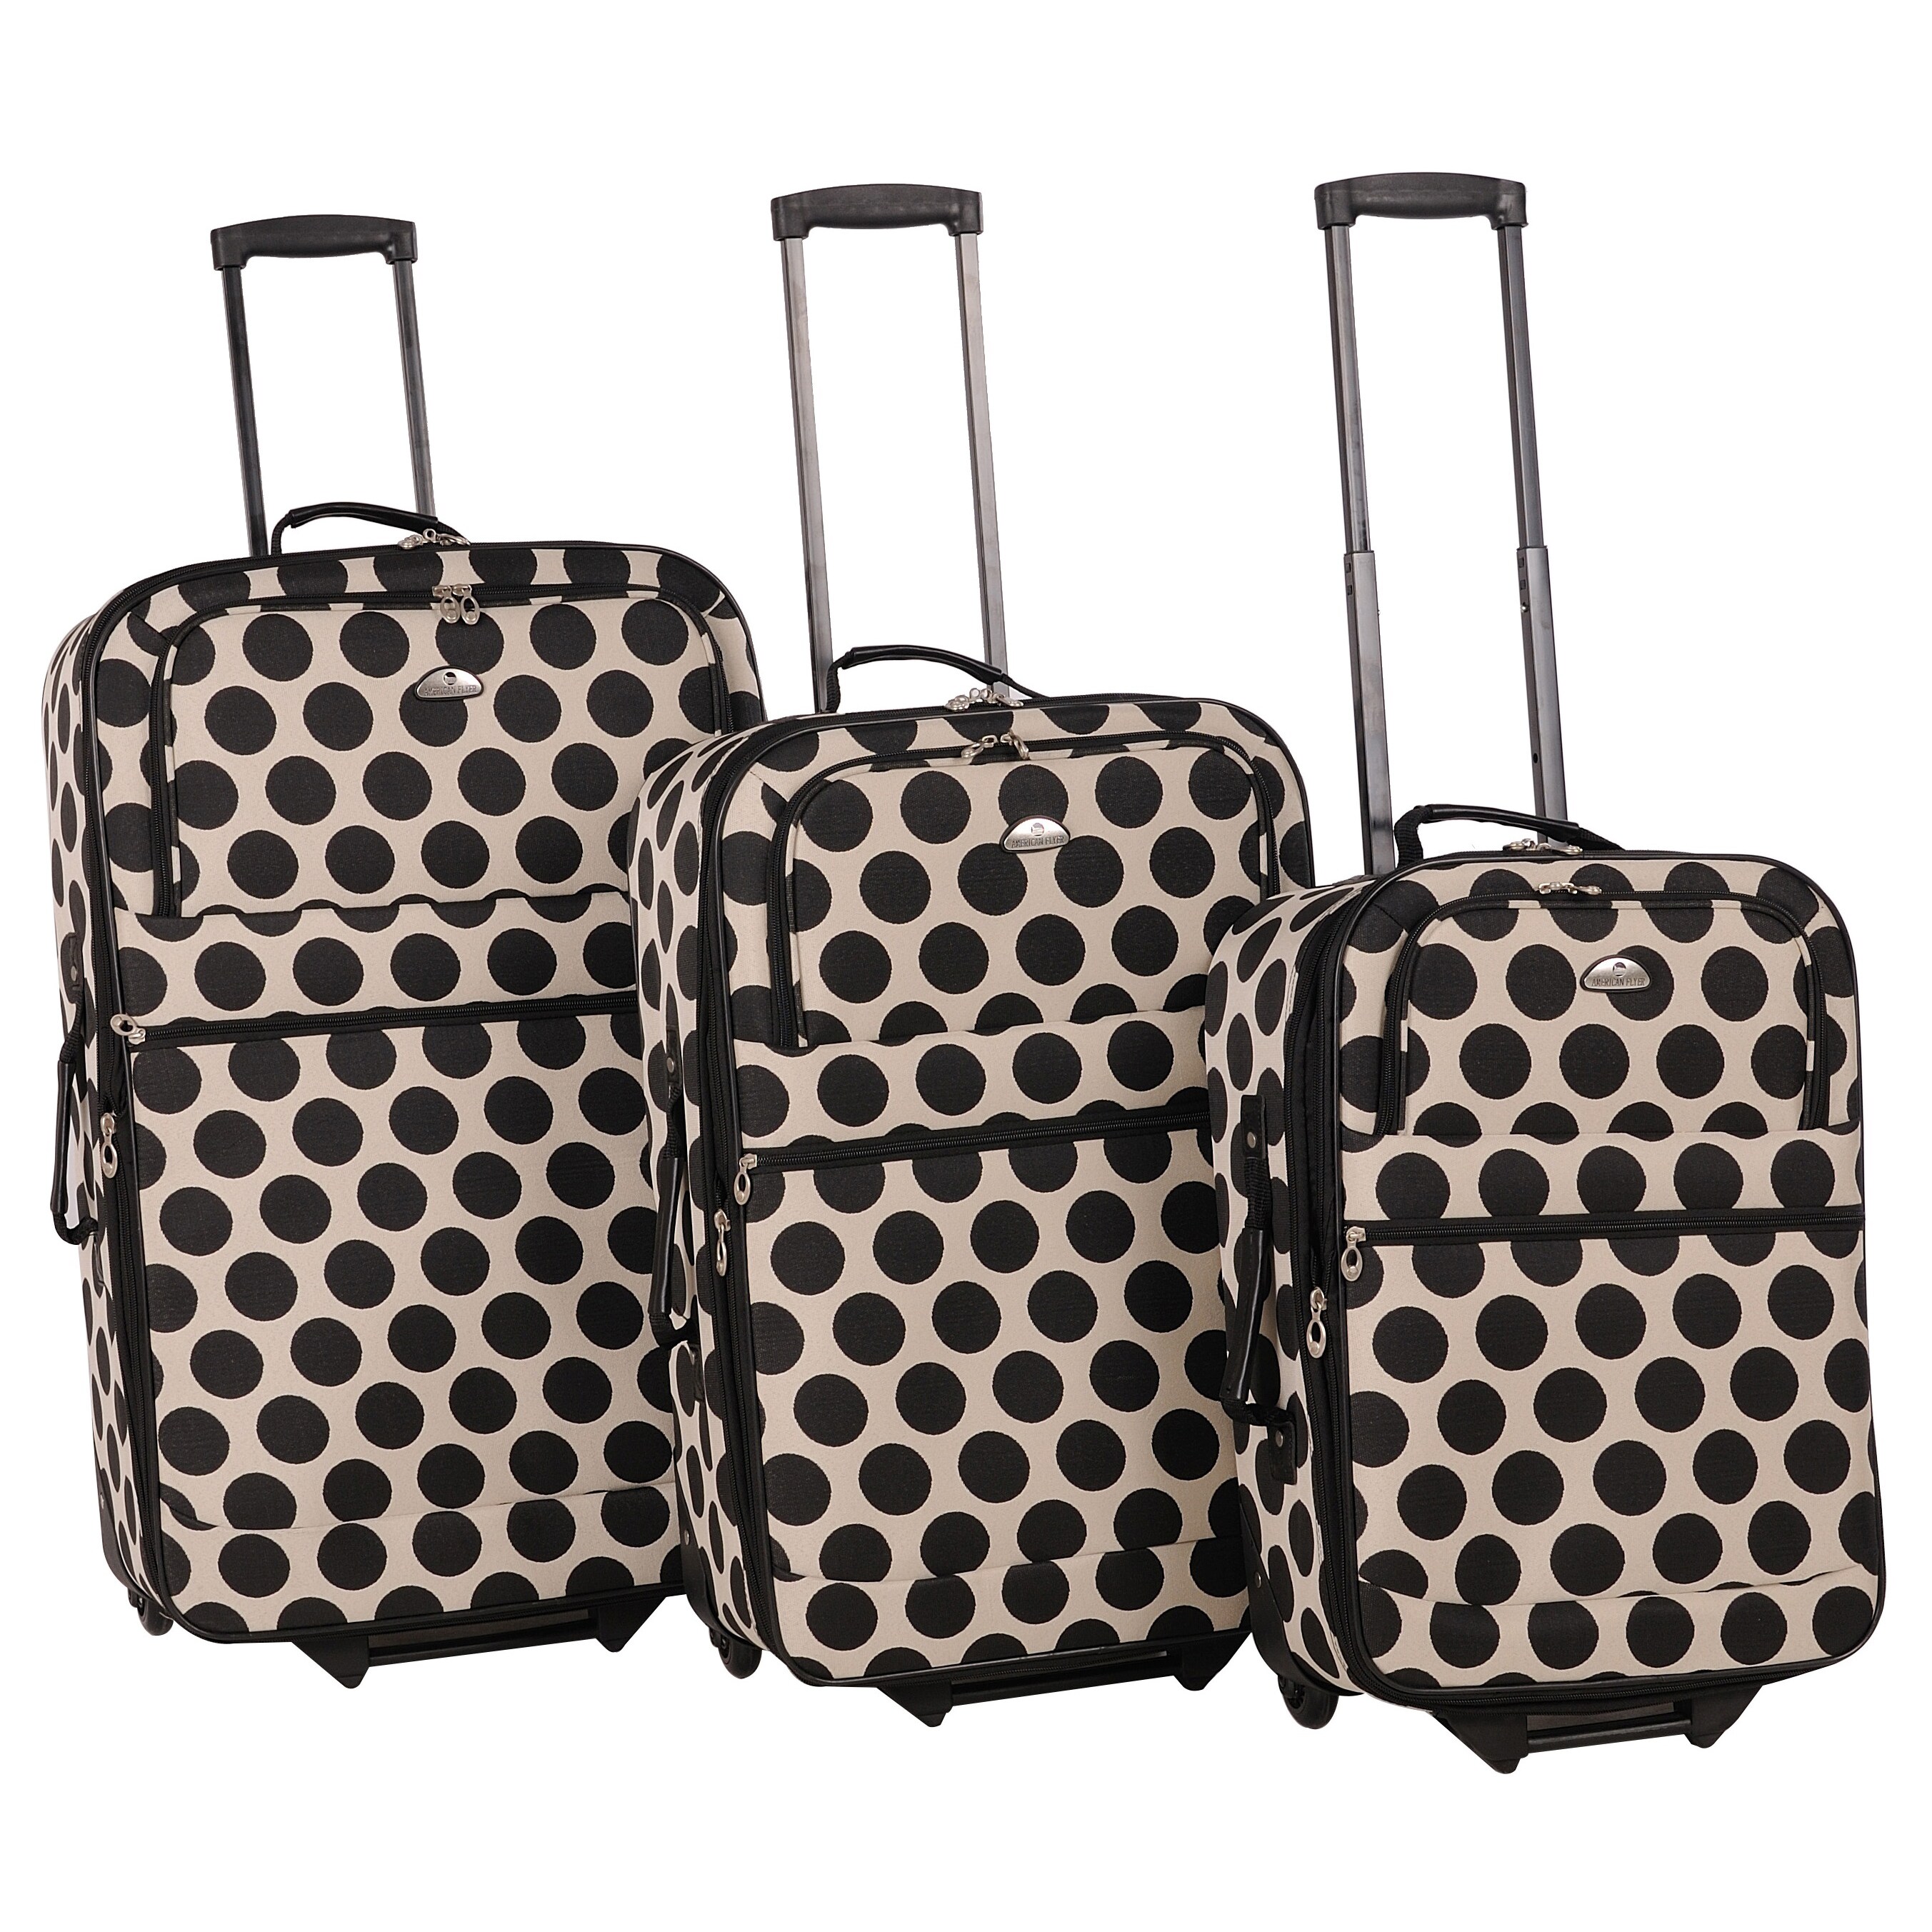 American Flyer Panda Collection 3 piece Polka dots Luggage Set